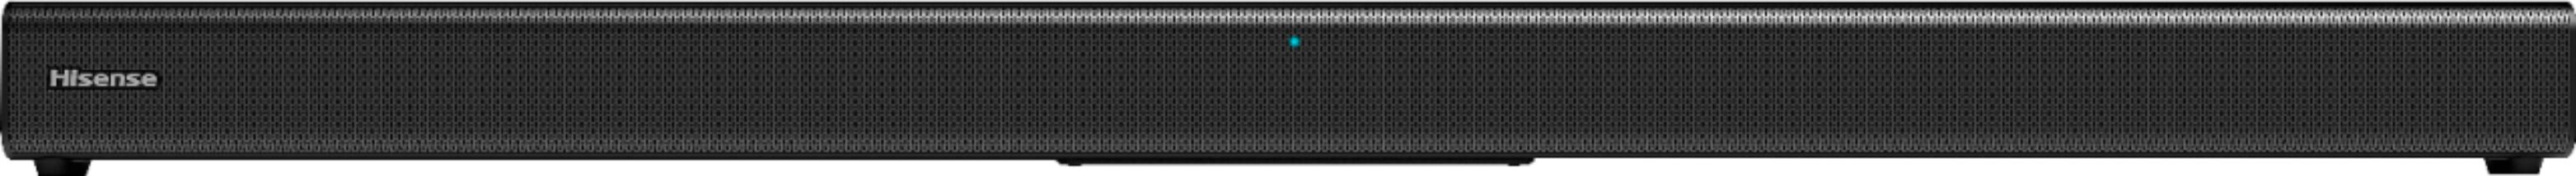 HS205 2.0-Channel Buy: Best Hisense black Soundbar